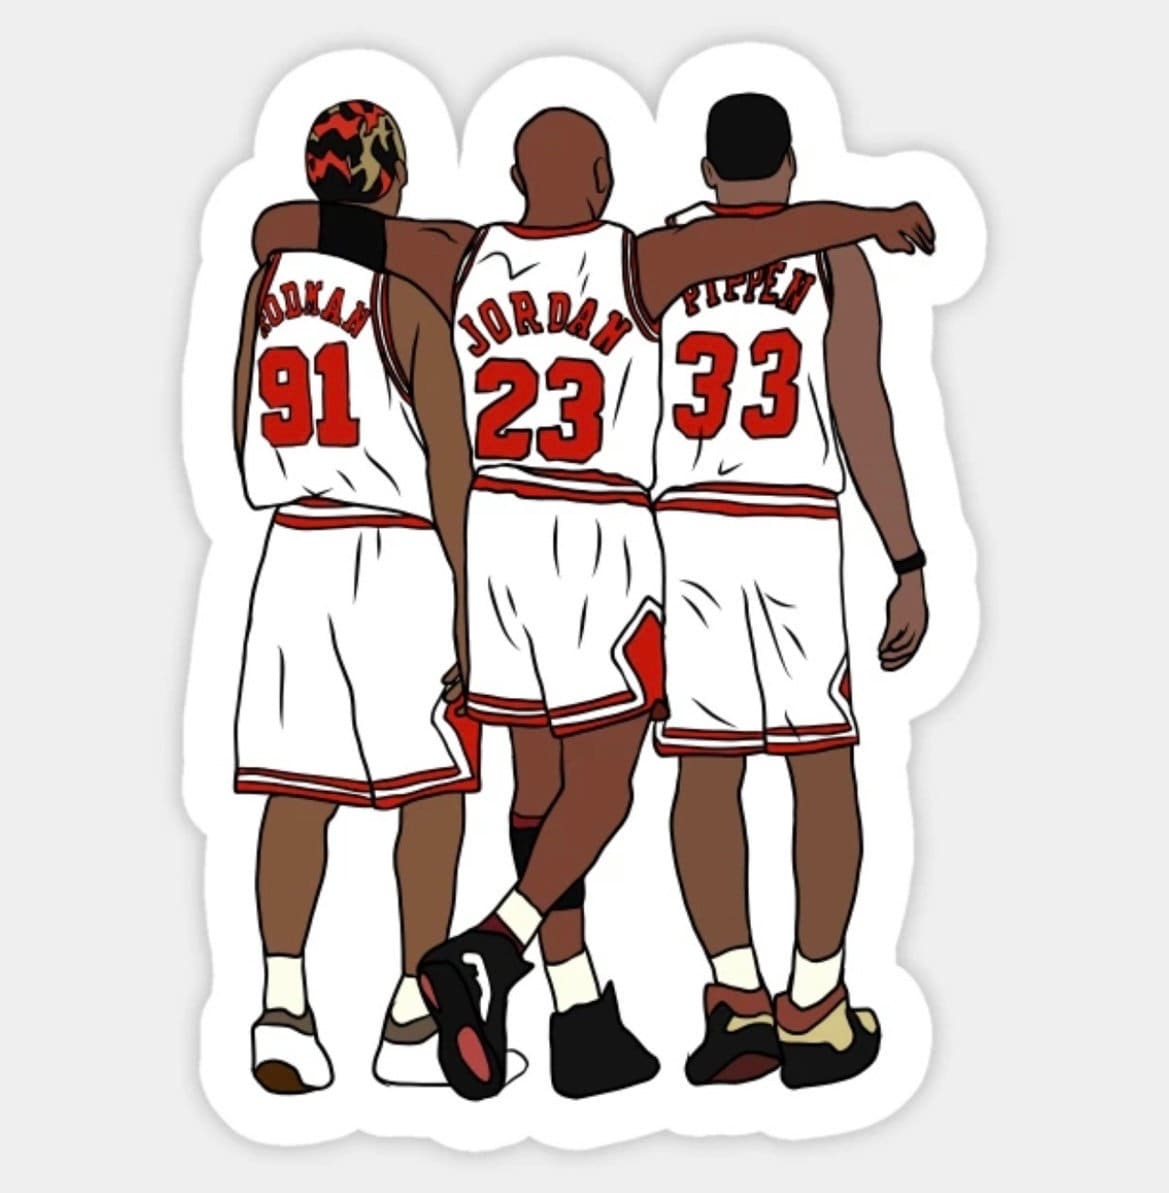 Chicago Bulls "Titlewave" Jordan, Pippen, Rodman 35x23 Poster  Pre-Owned NICE!!!